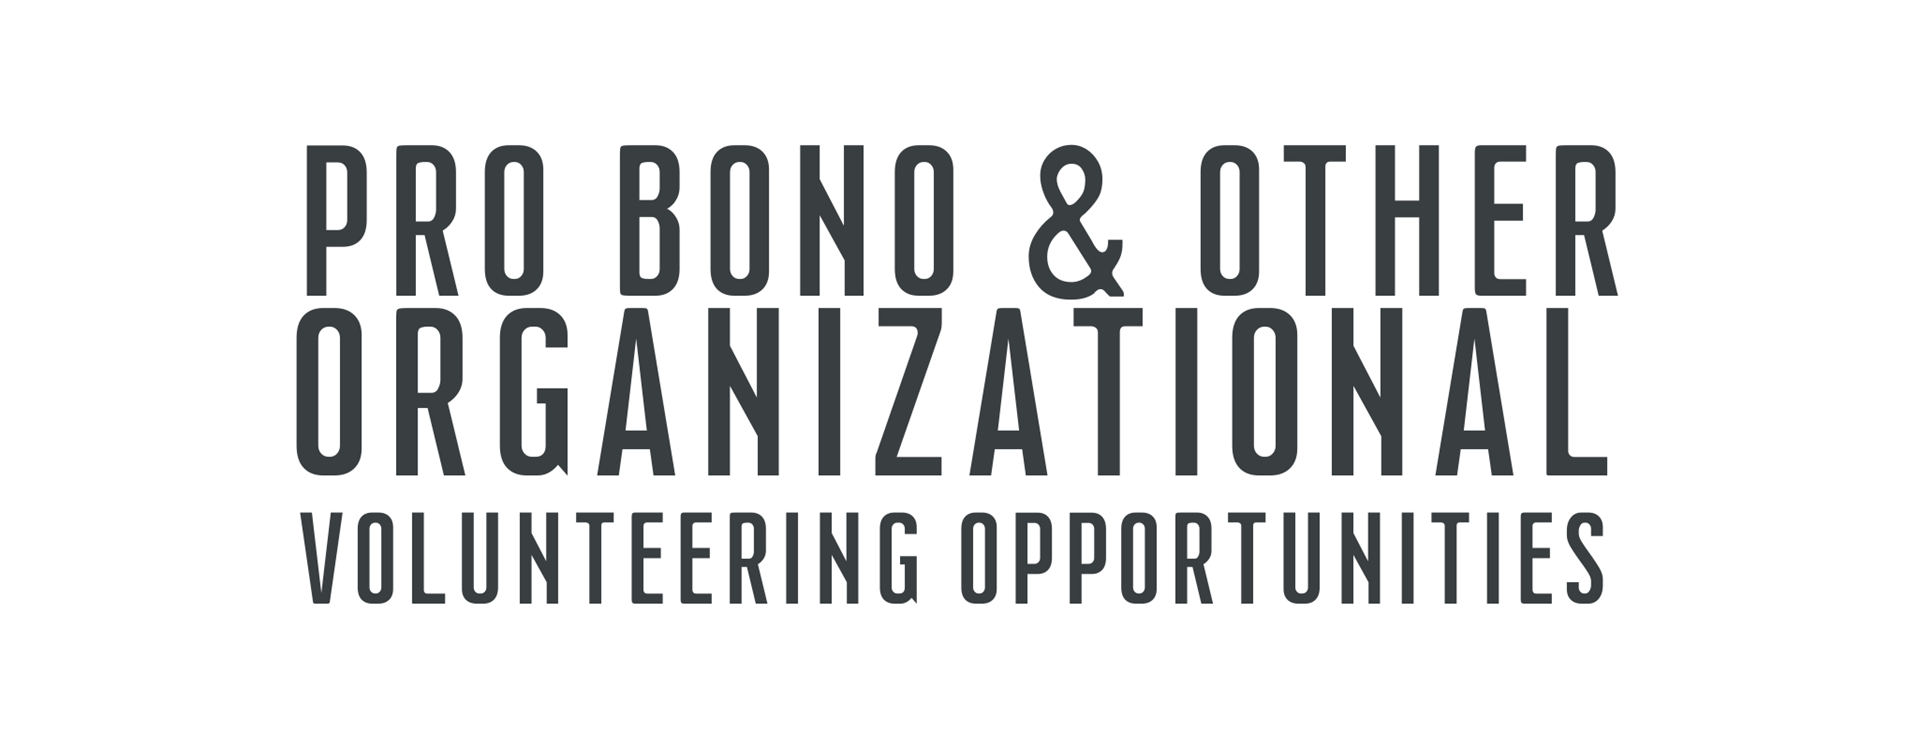 Pro Bono & Other Organizational Volunteering Opportunities